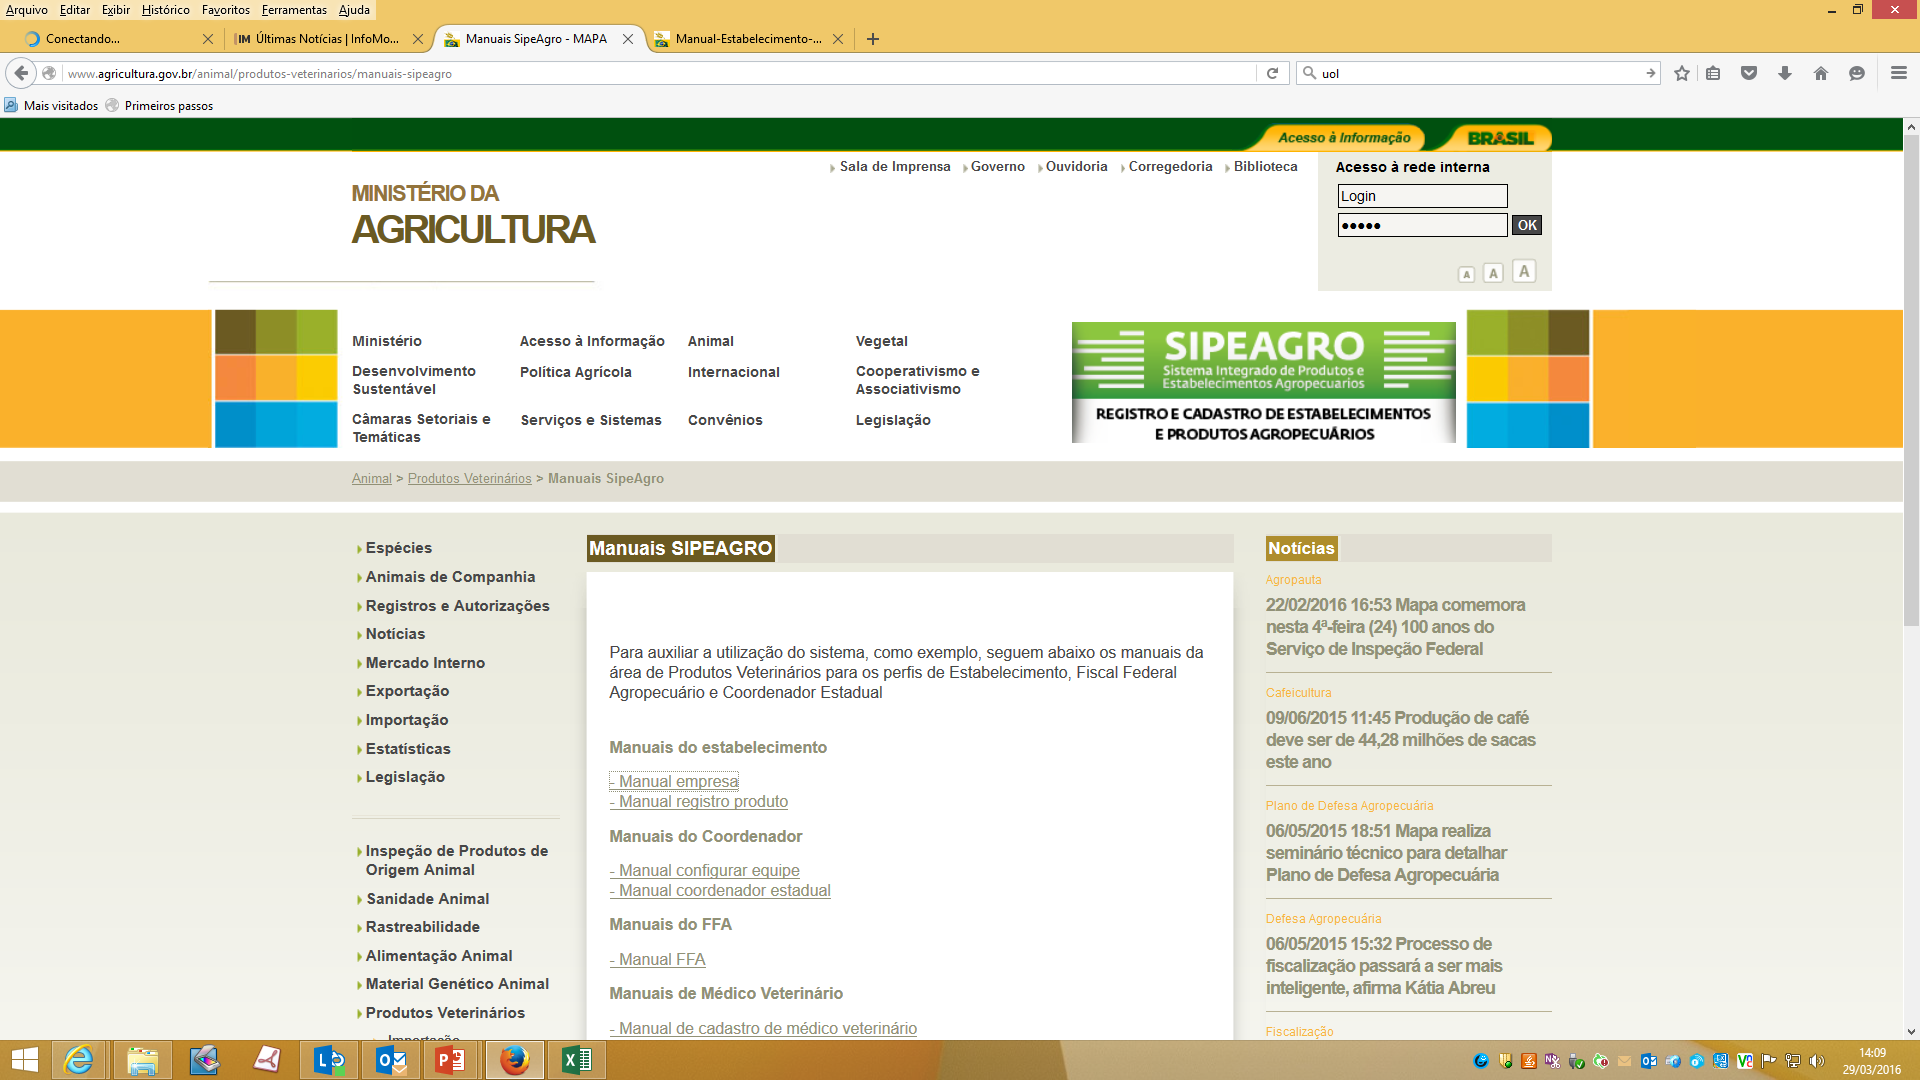 www.agricultura.gov.